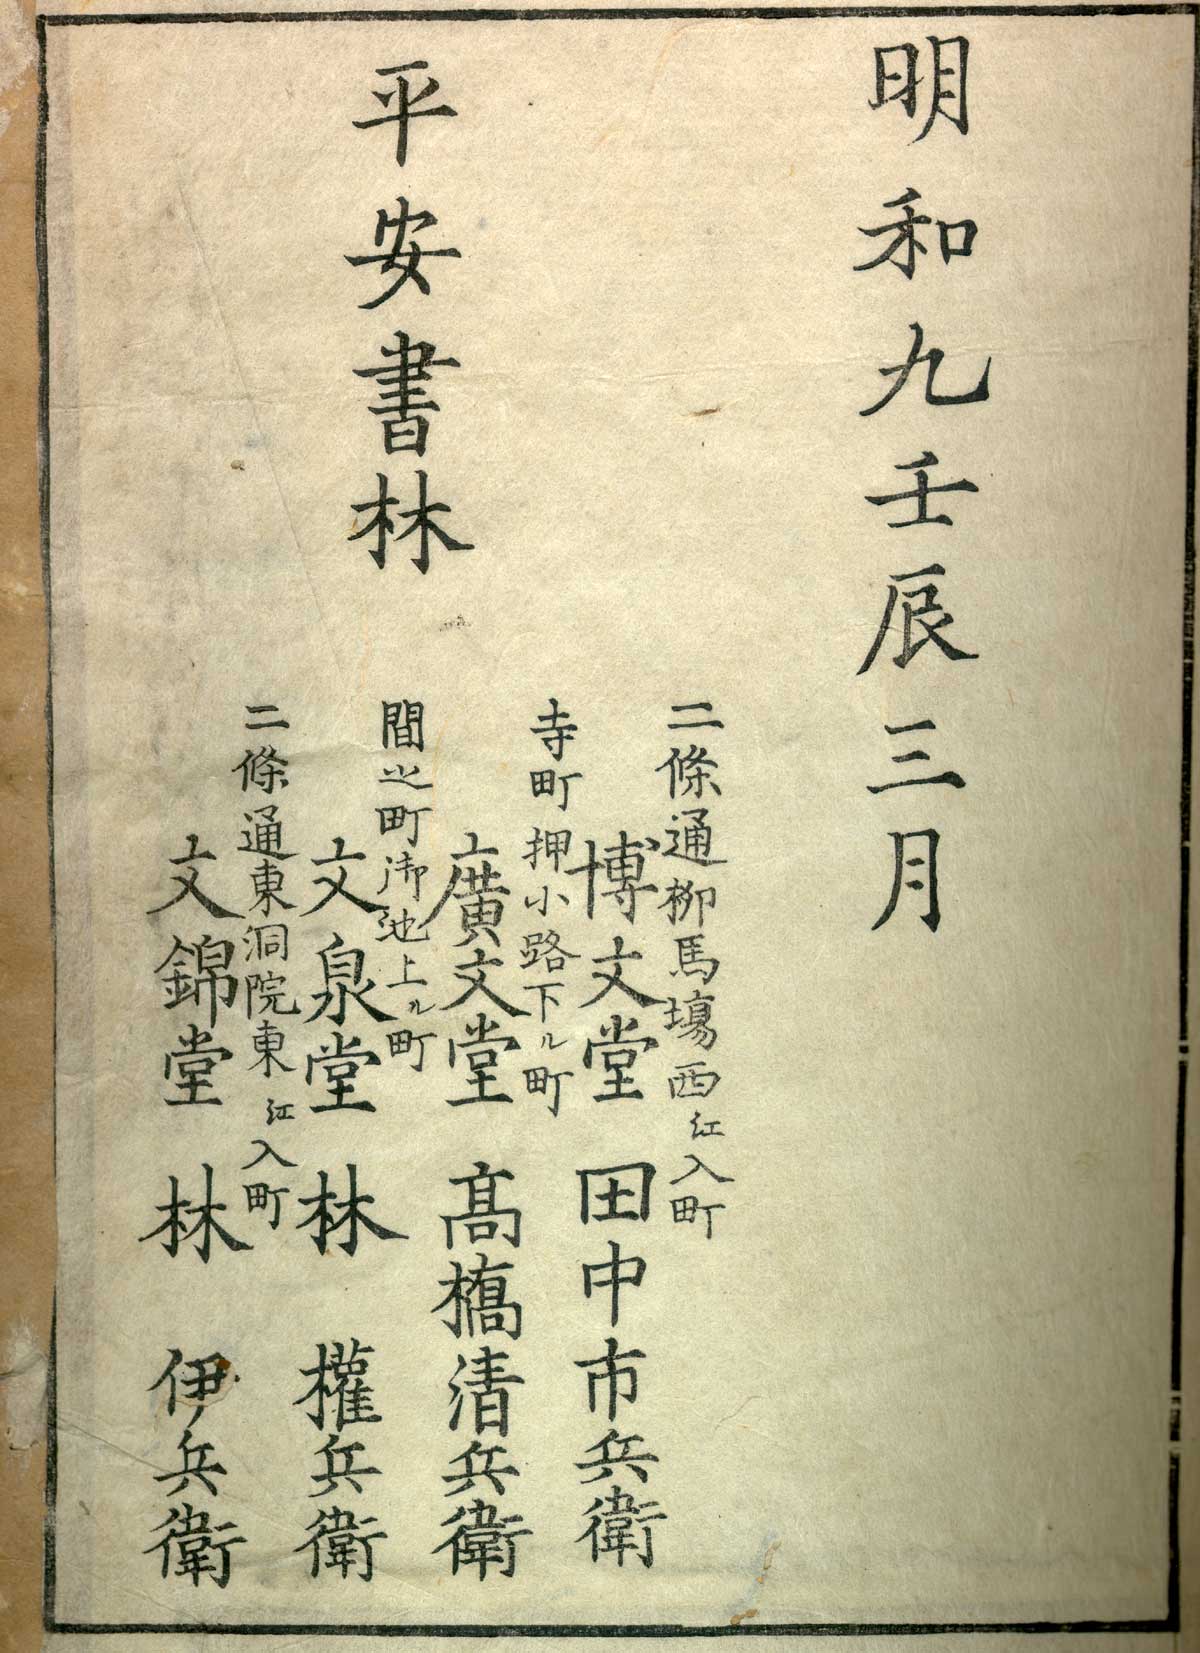 Colophon of Shinnin Kawaguchi's Kaishi hen, NLM Call no.: WZ 260 K21k 1772.